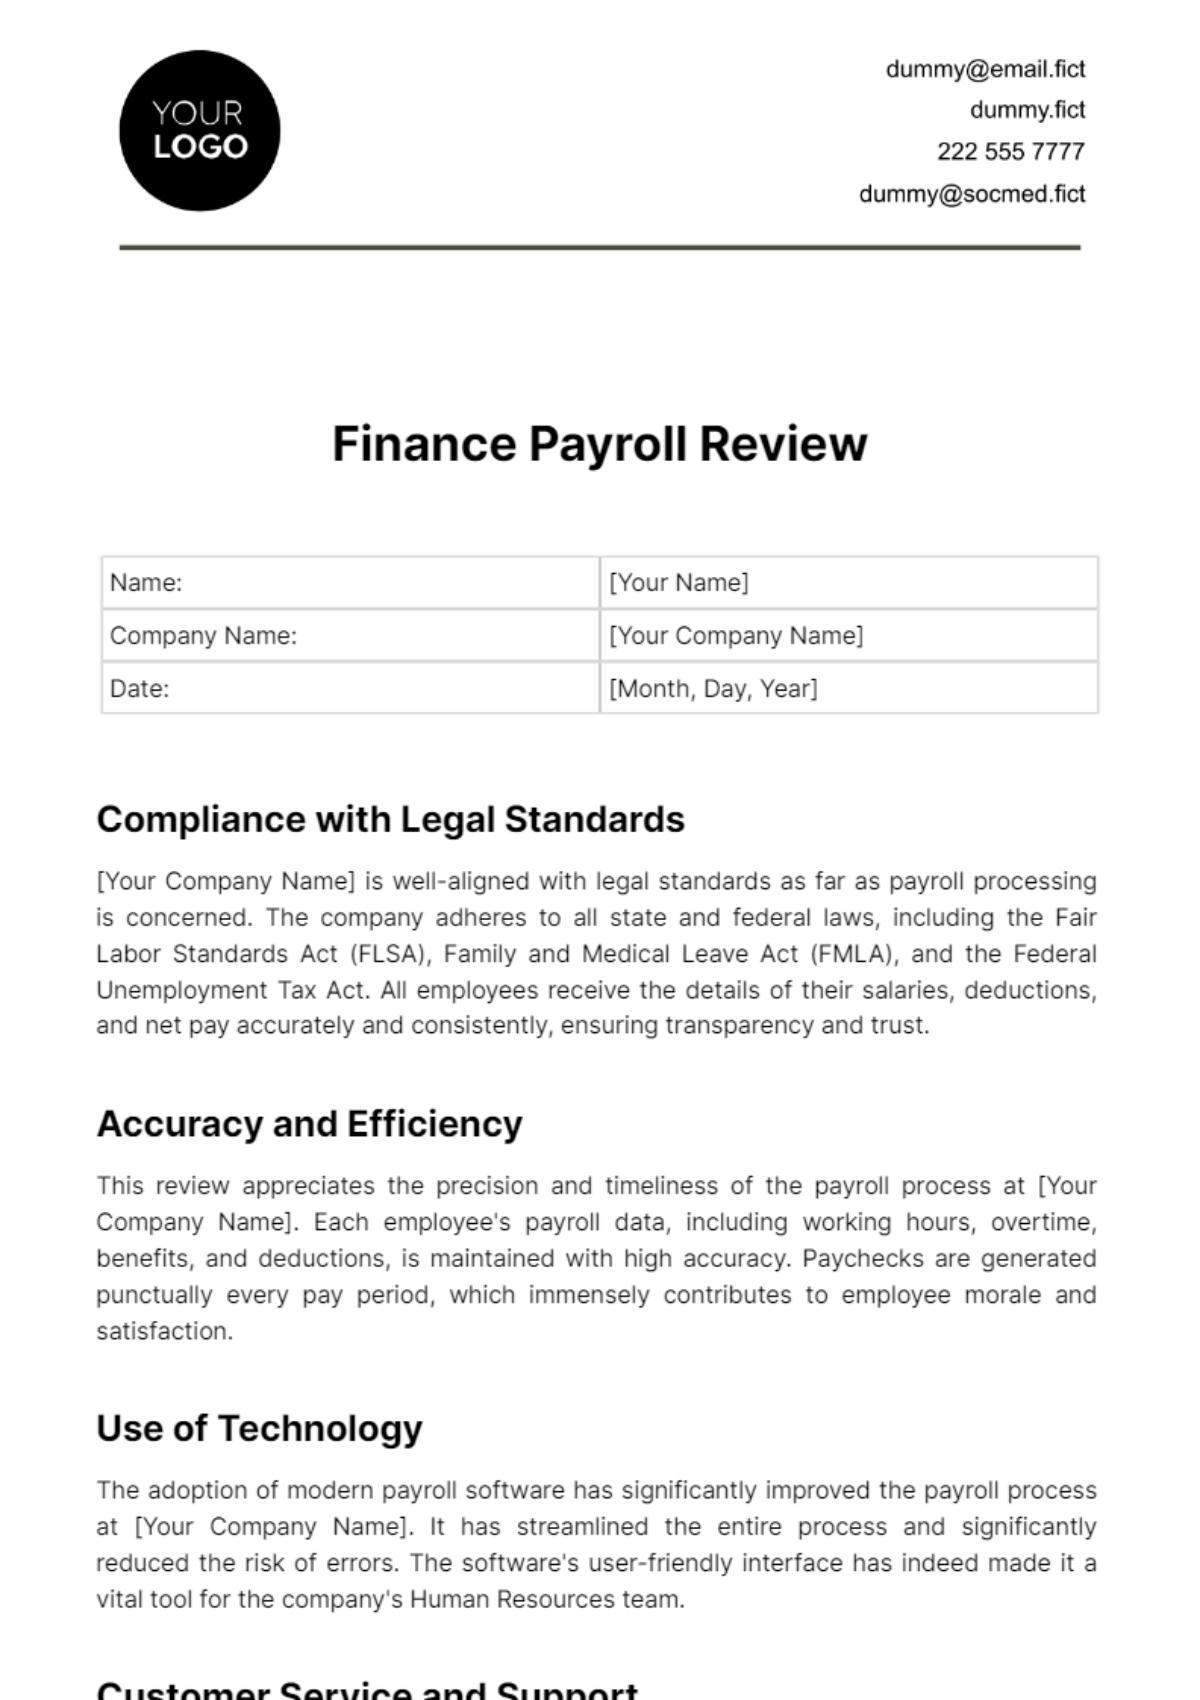 Finance Payroll Review Template